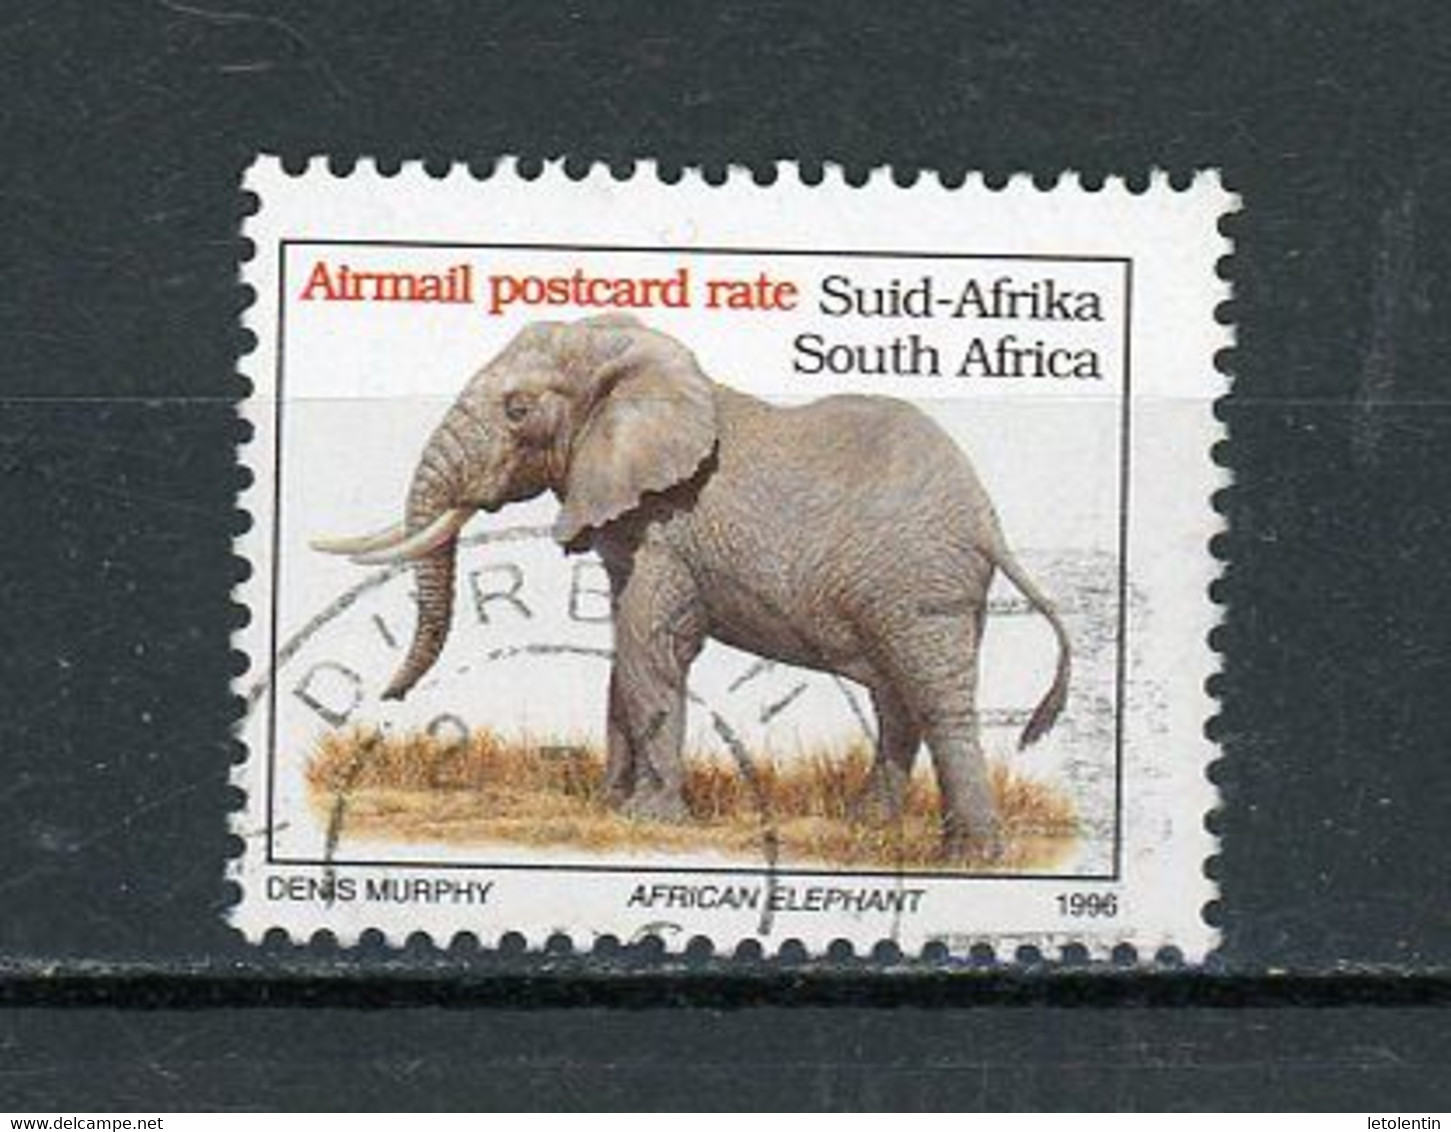 AFRIQUE DU SUD : POSTE AERIENNE (ELEPHANT) - N° Yvert 11 Obli. - Airmail